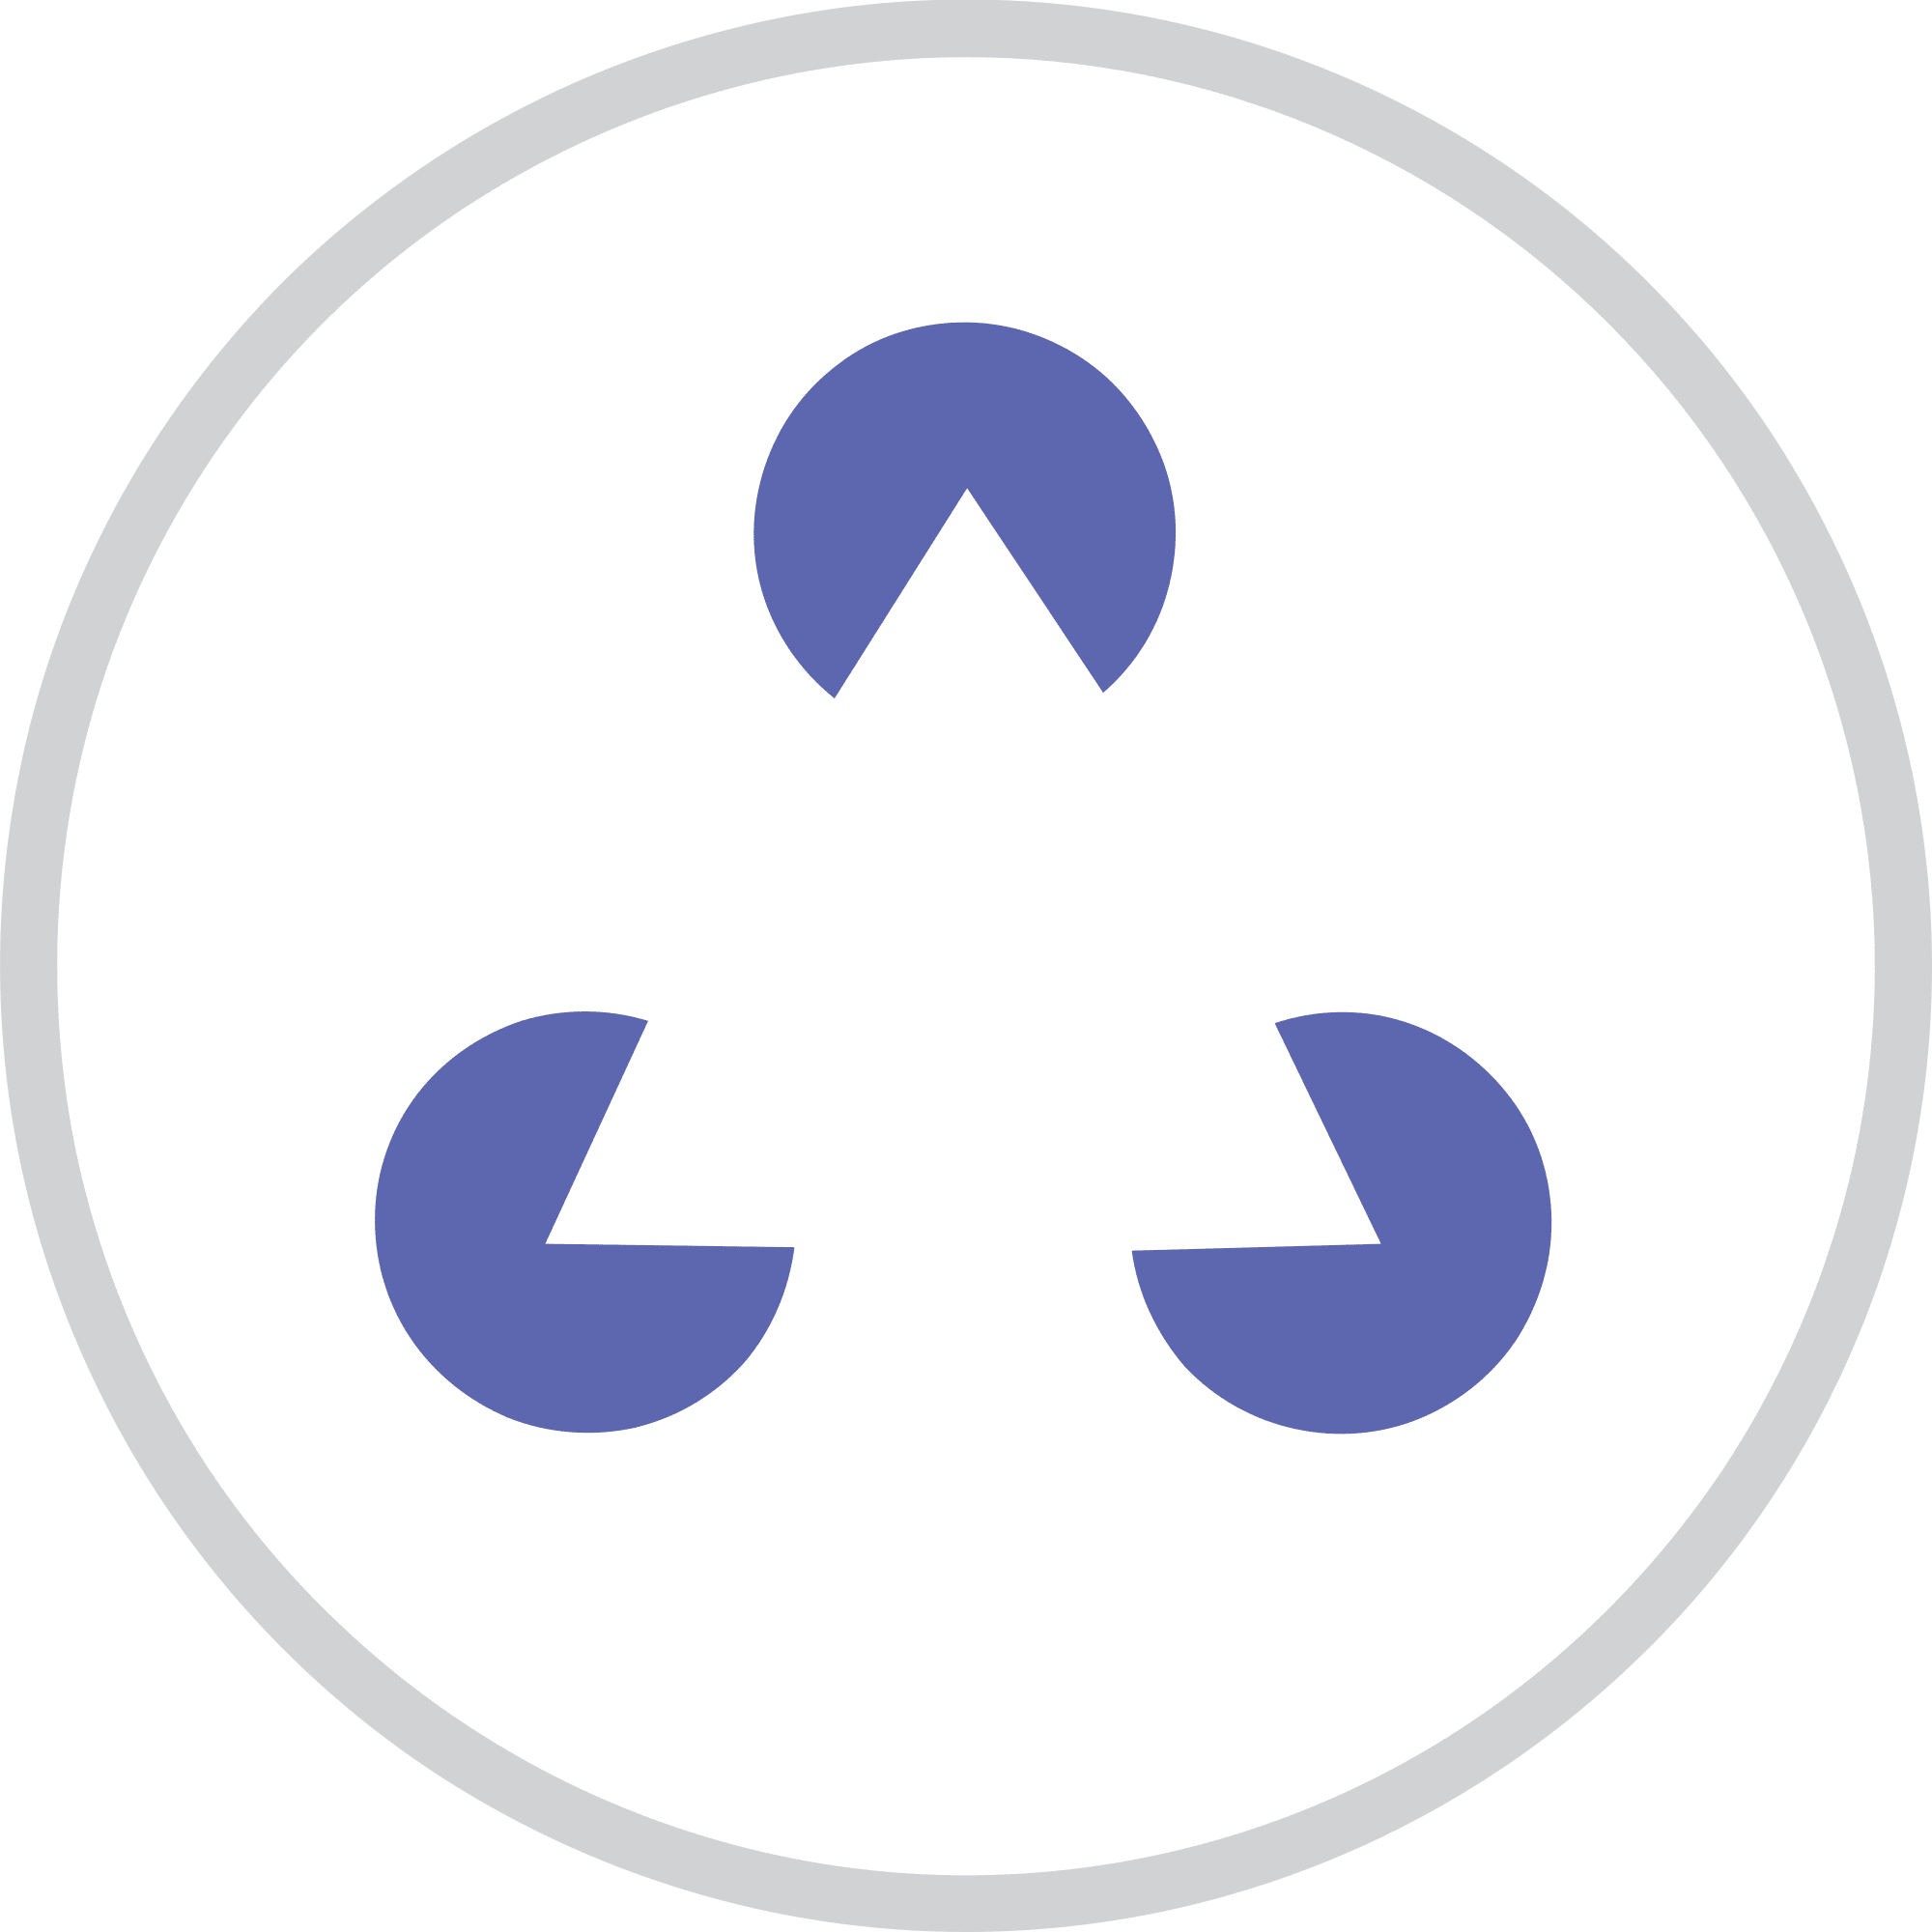 Starname logo in png format